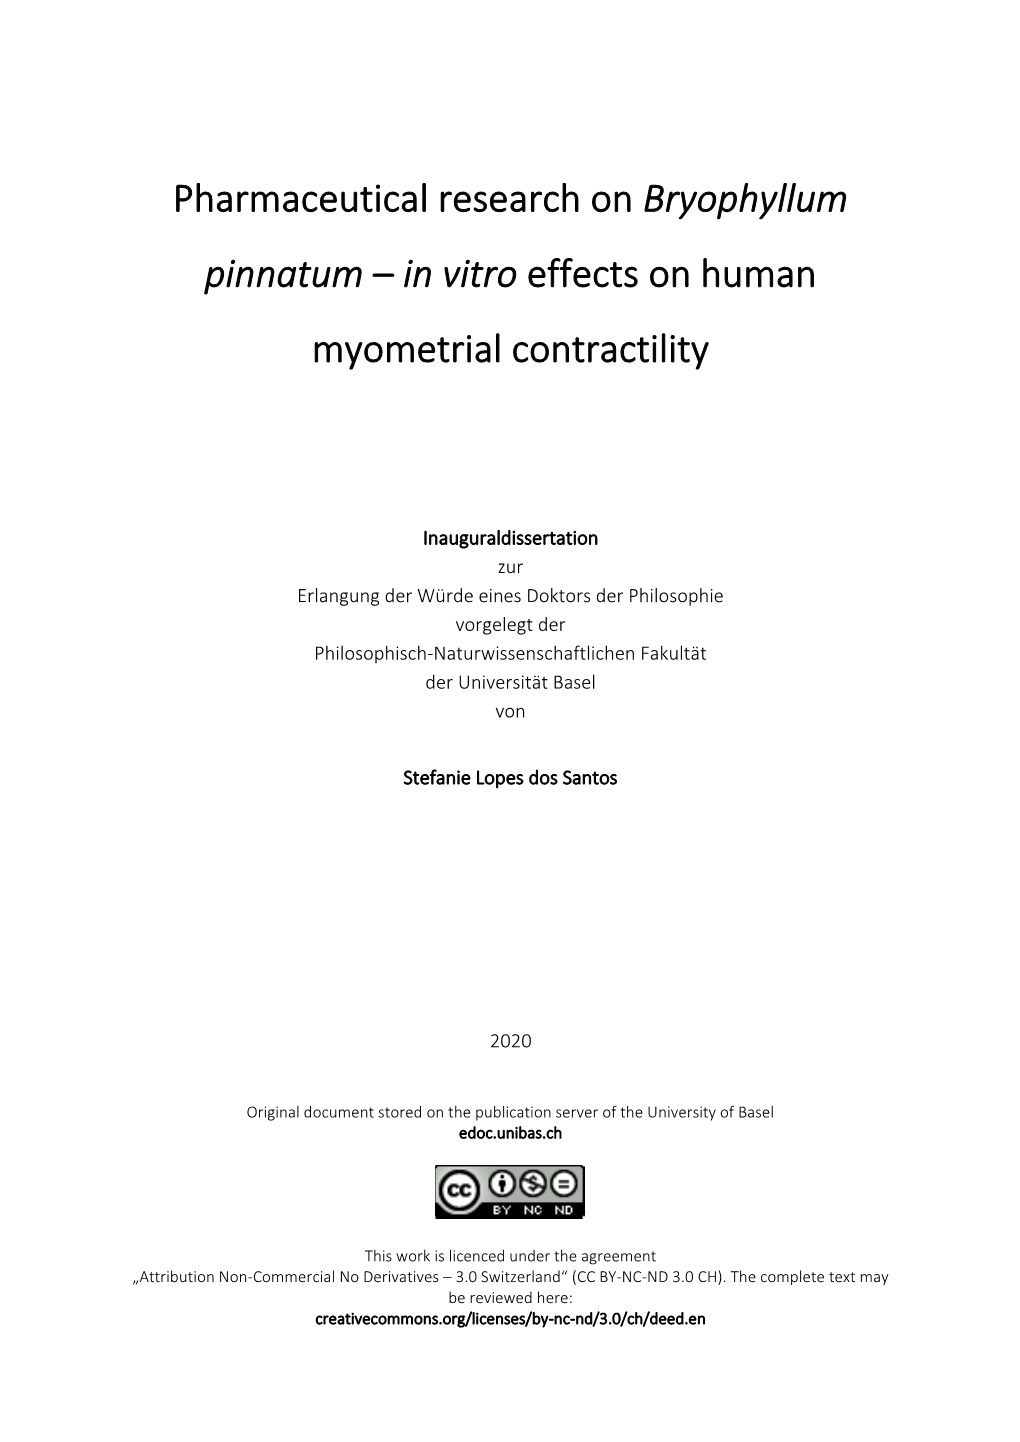 Bryophyllum Pinnatum – in Vitro Effects on Human